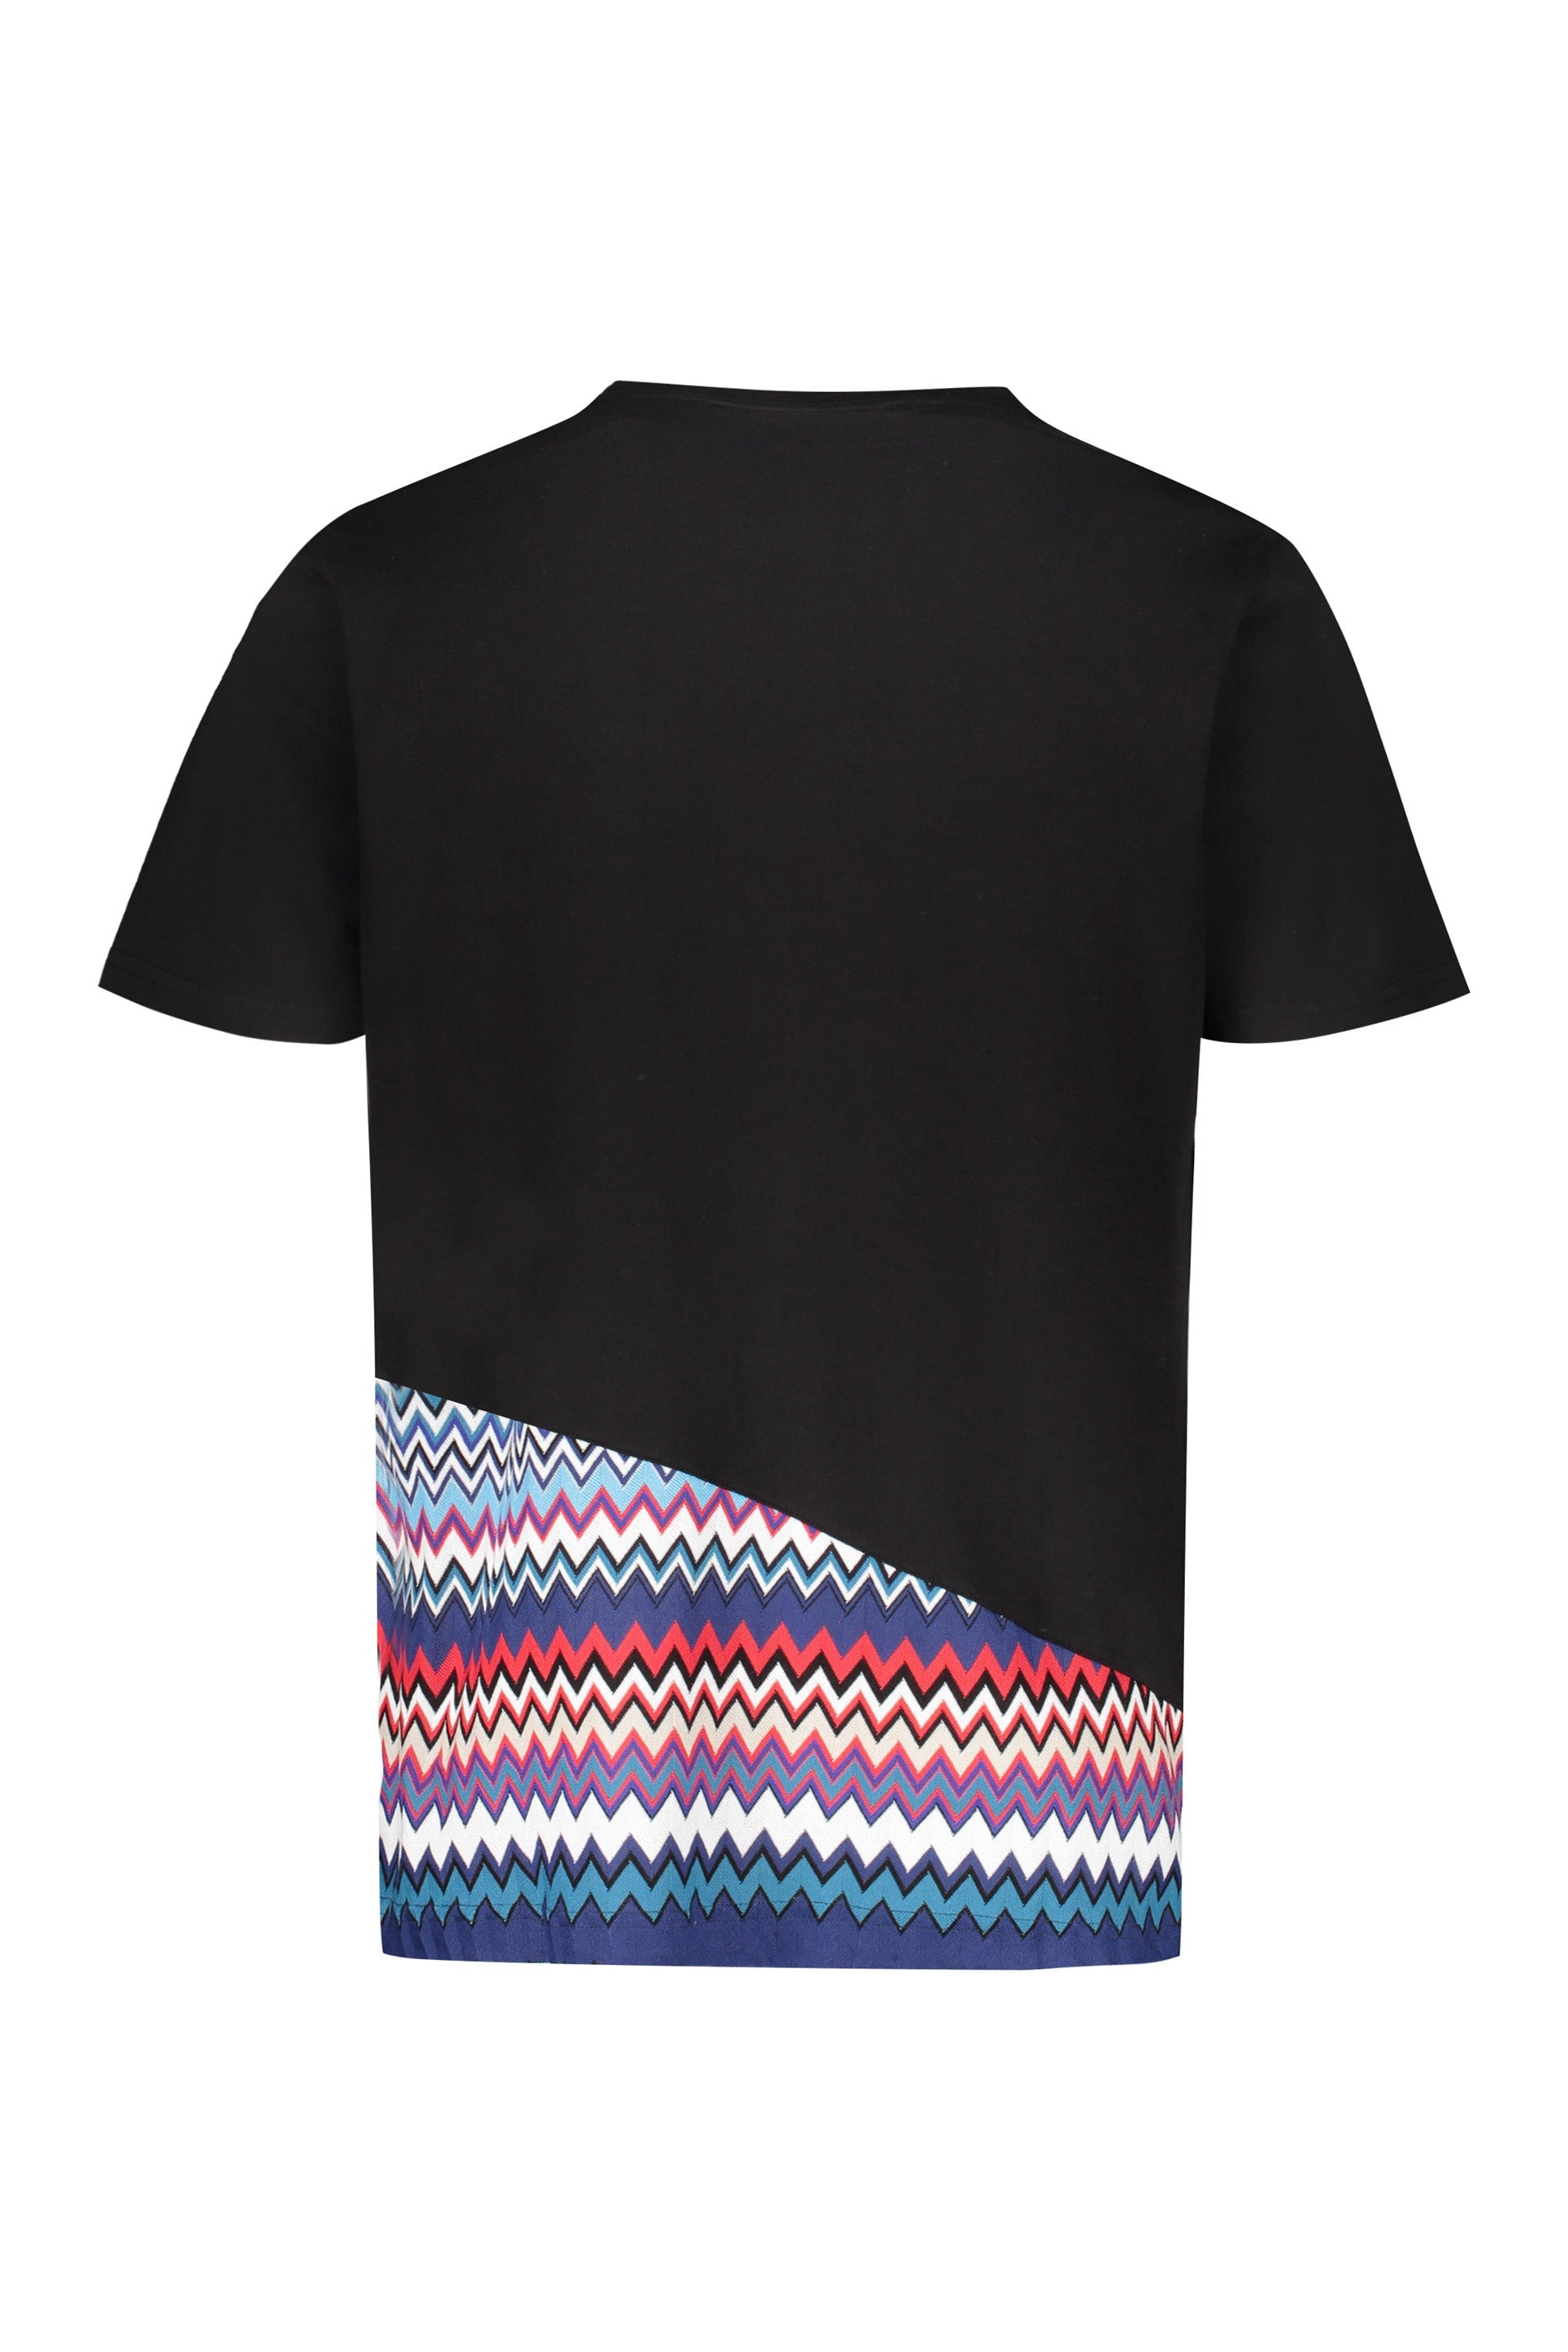 Missoni-OUTLET-SALE-Logo-cotton-t-shirt-Shirts-ARCHIVE-COLLECTION-2_721e5546-6527-4182-b3a8-f9eb9dc4819c.jpg